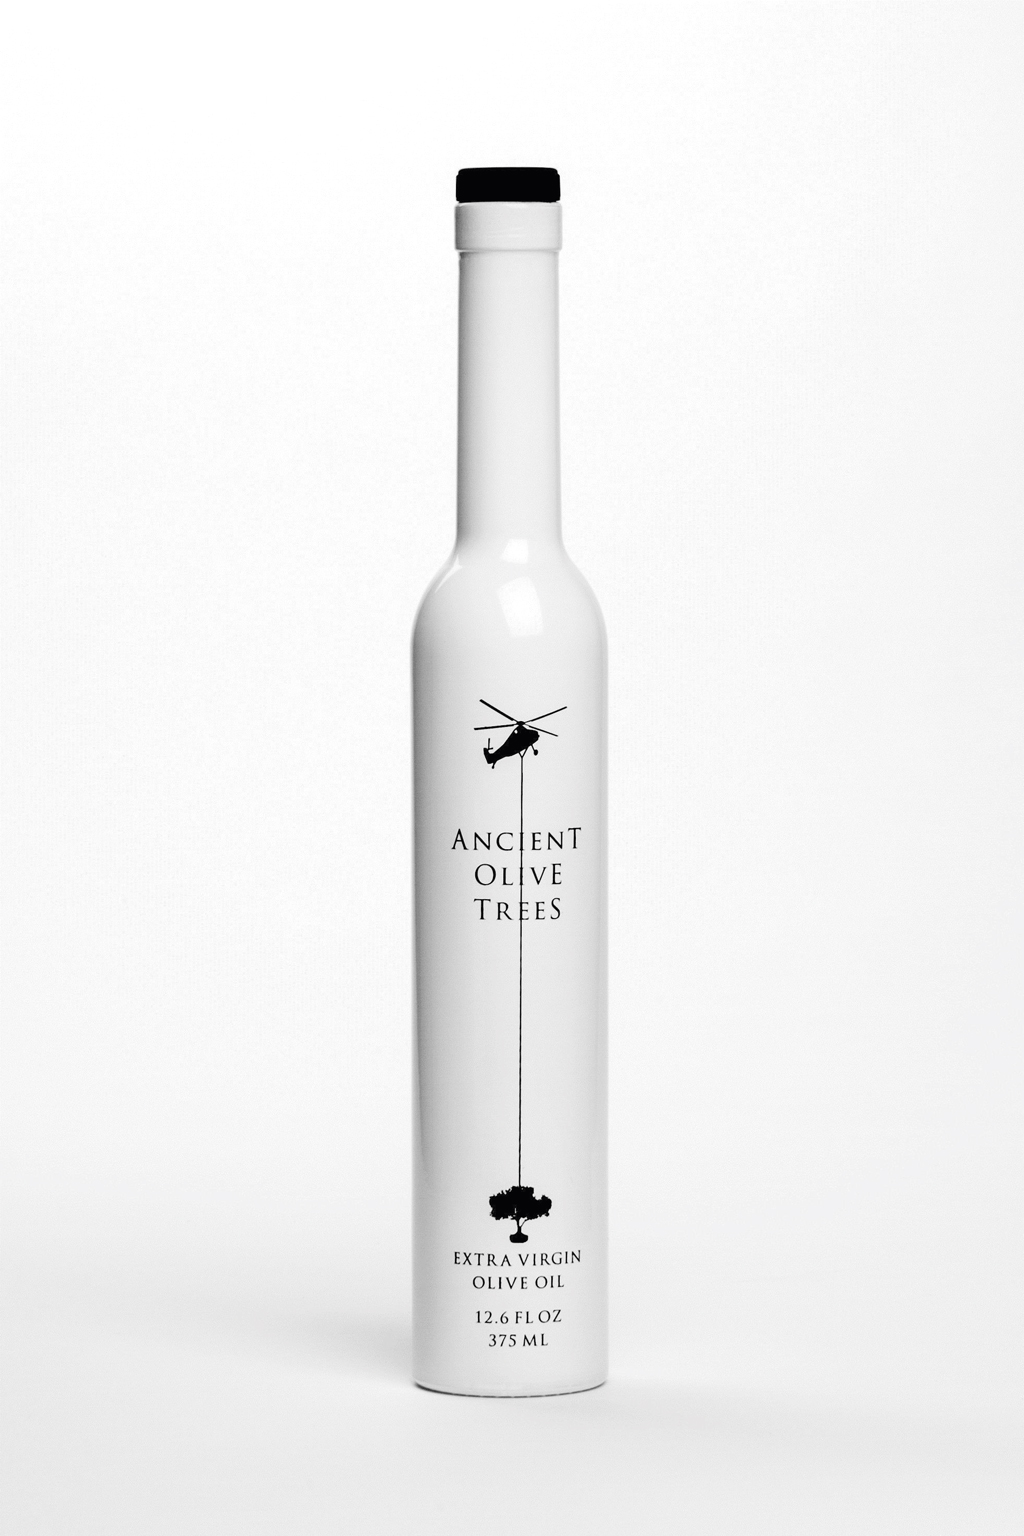 a bottle of olive oil